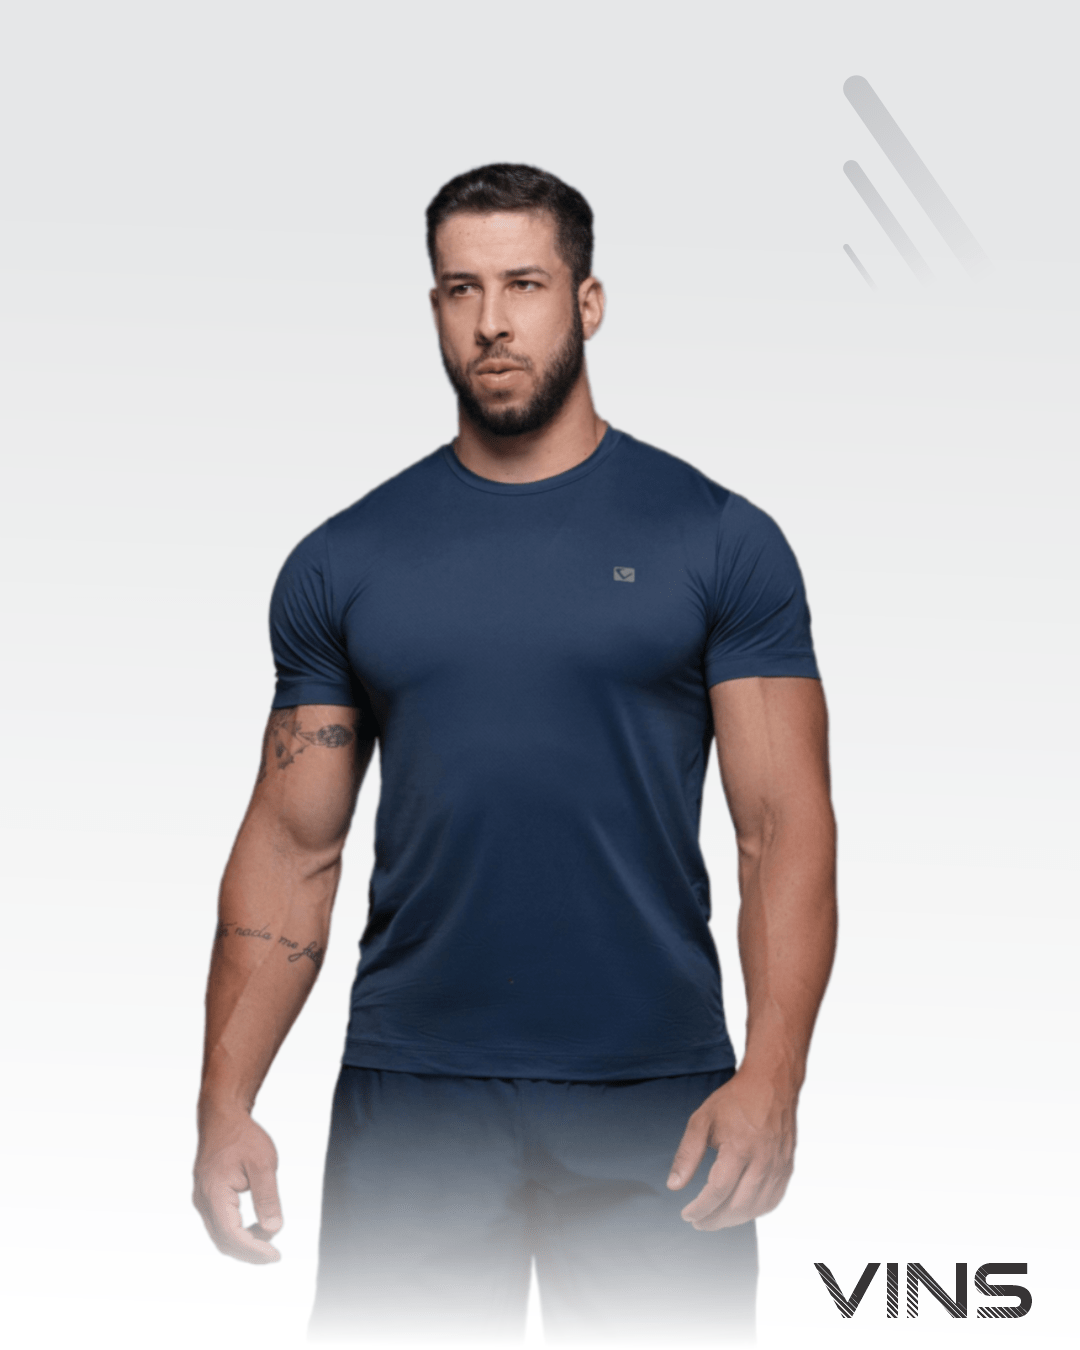 https://85454.cdn.simplo7.net/static/85454/sku/roupas-camisetas-masculinas-camiseta-dry-fit-azul-marinho--p-1667593019478.png